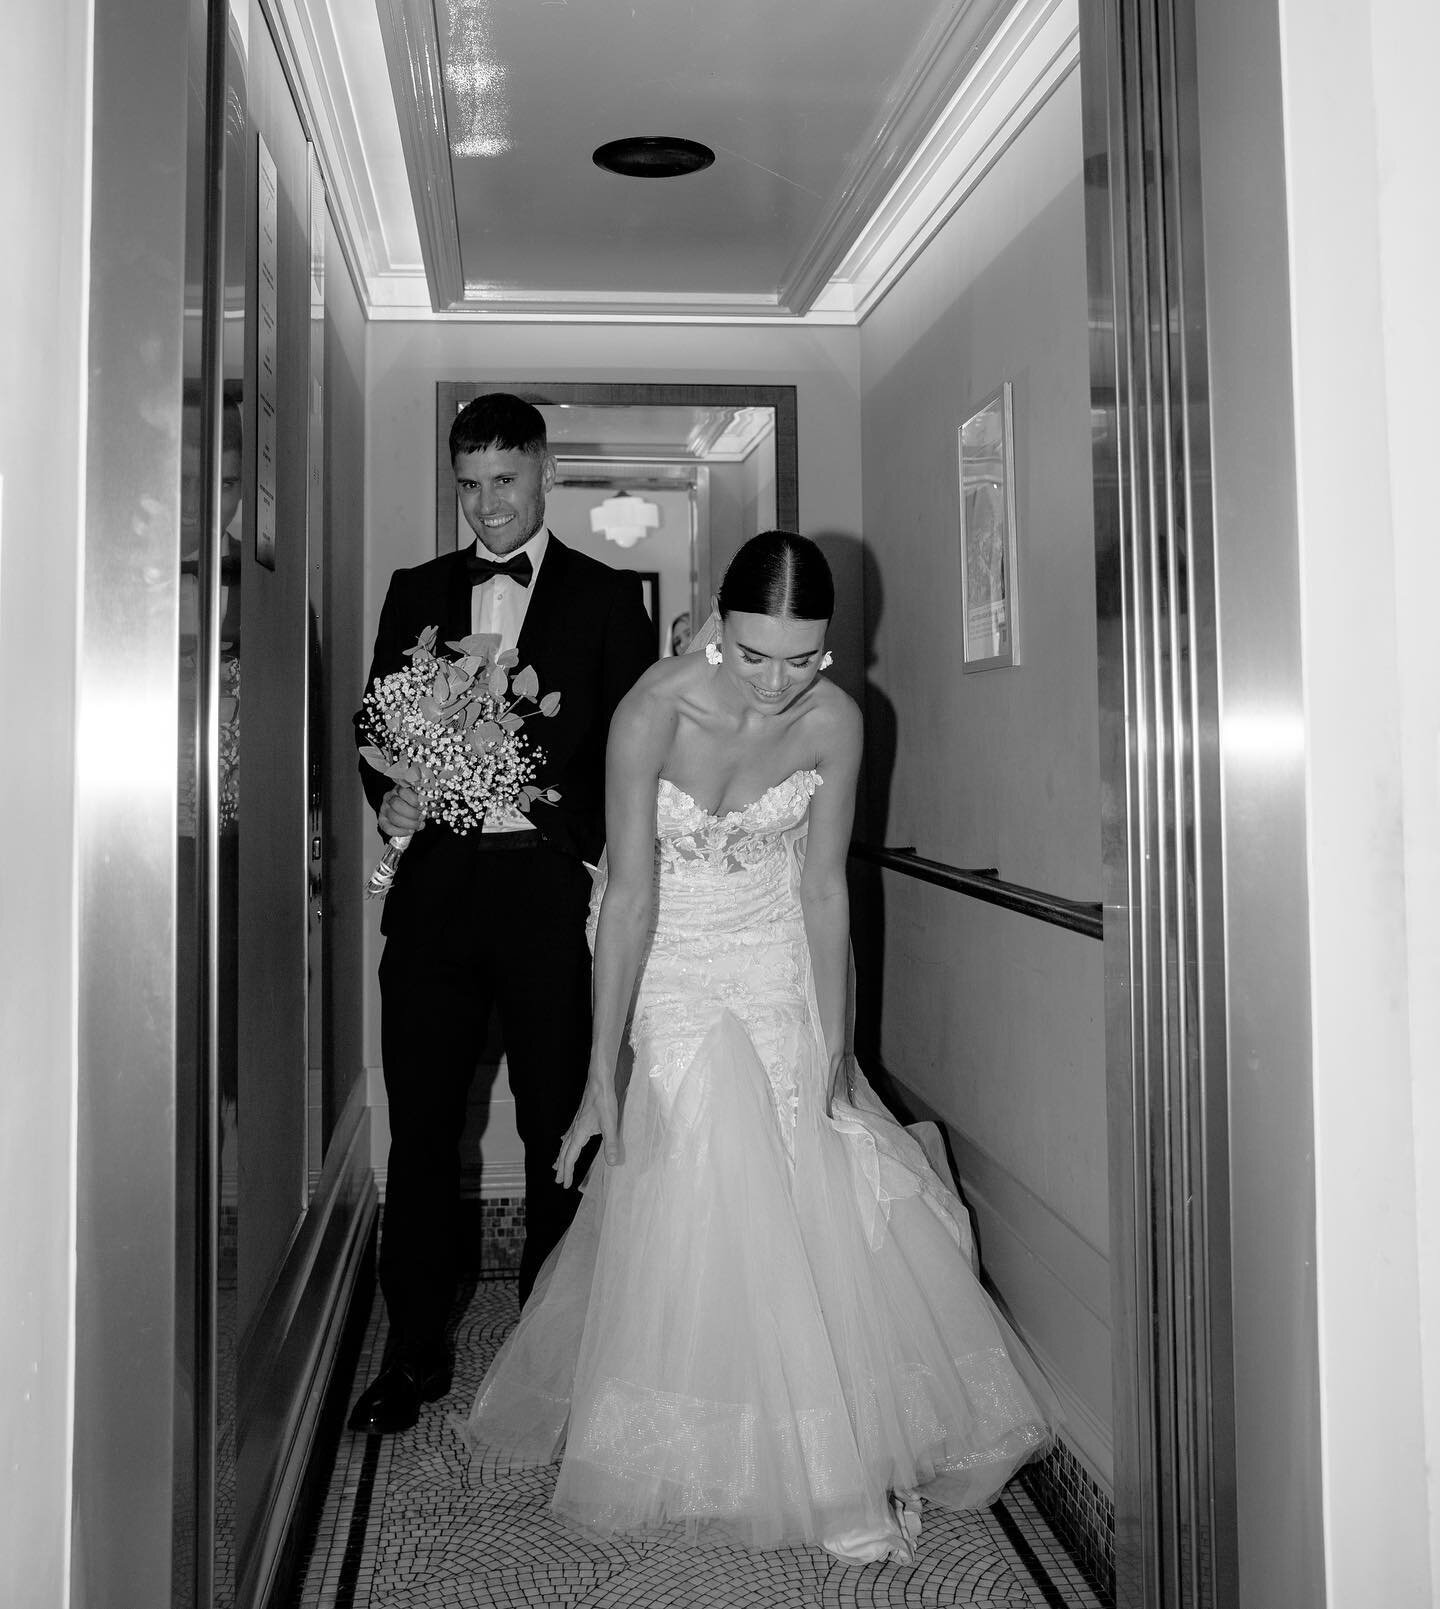 Going up ☝🏻🖤 #wedding #weddingphotography #weddingphotographer #bride #bridegown #bridetobe #londonwedding #londonweddingphotographer